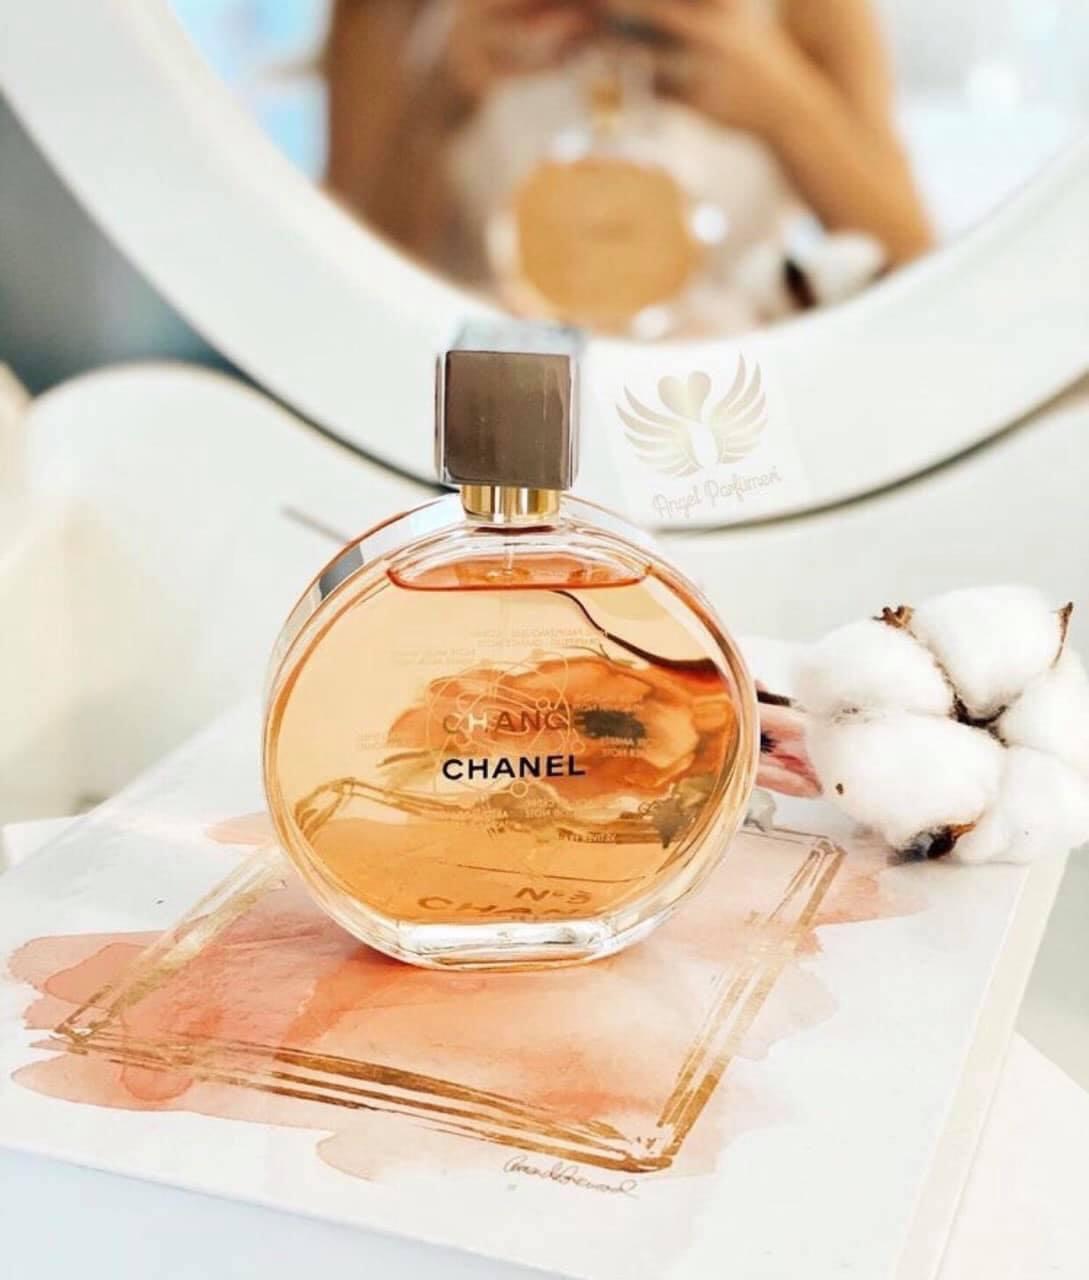 Nước Hoa Chanel Coco Vaporisateur Spray Cho Nữ 100ml  Guuperfume